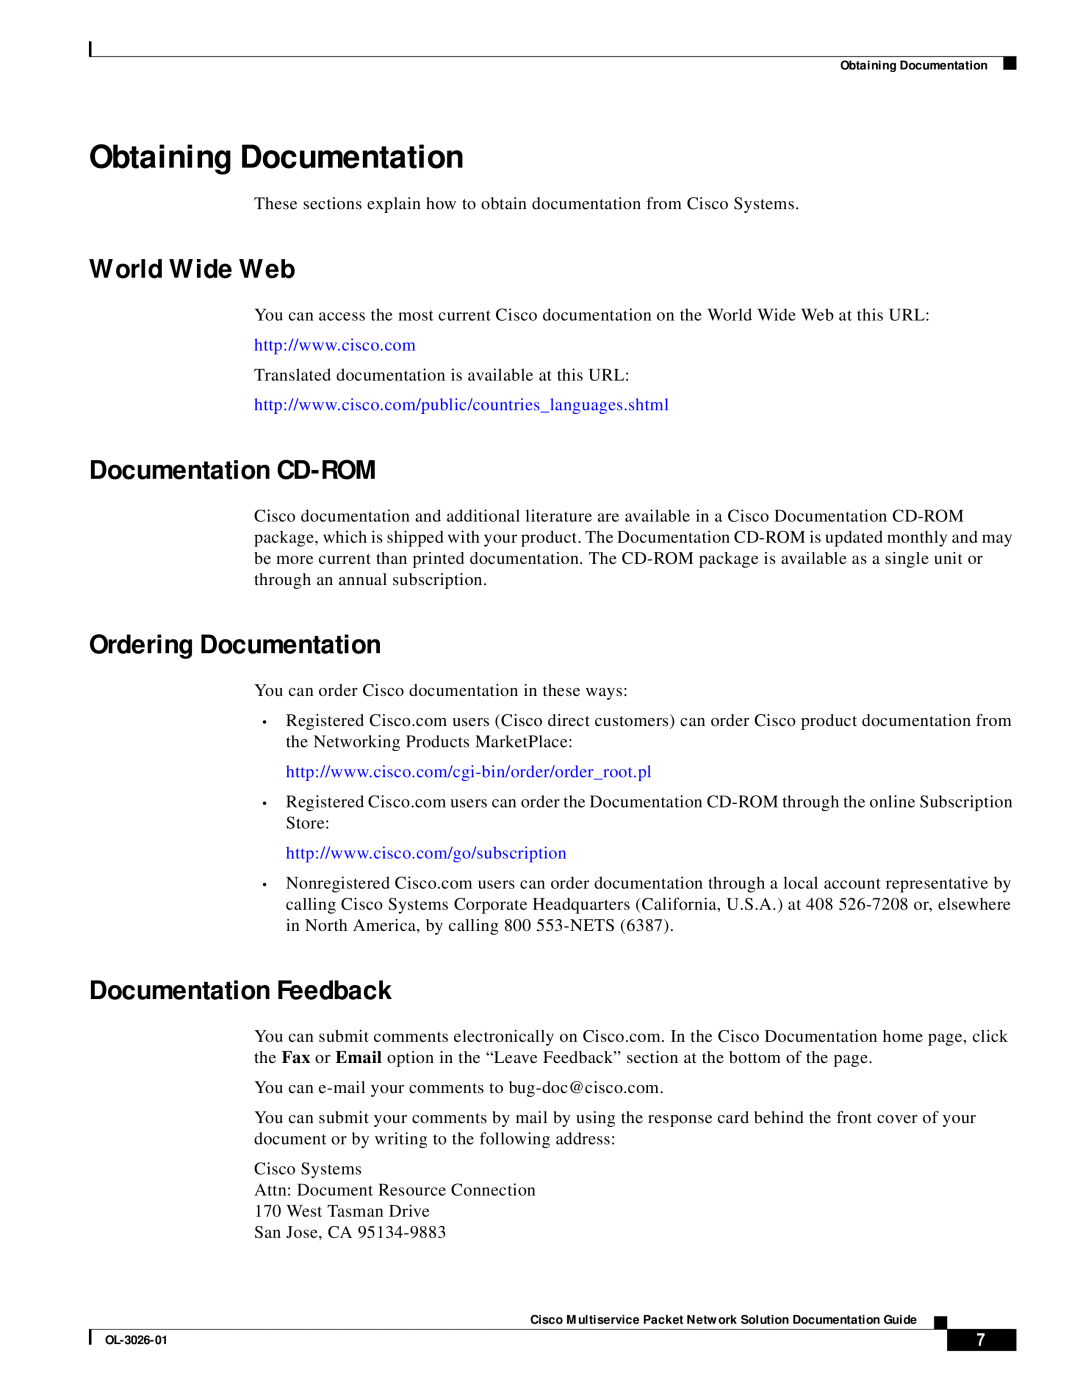 Cisco Systems OL-3026-01 manual Obtaining Documentation, World Wide Web, Documentation CD-ROM, Ordering Documentation 